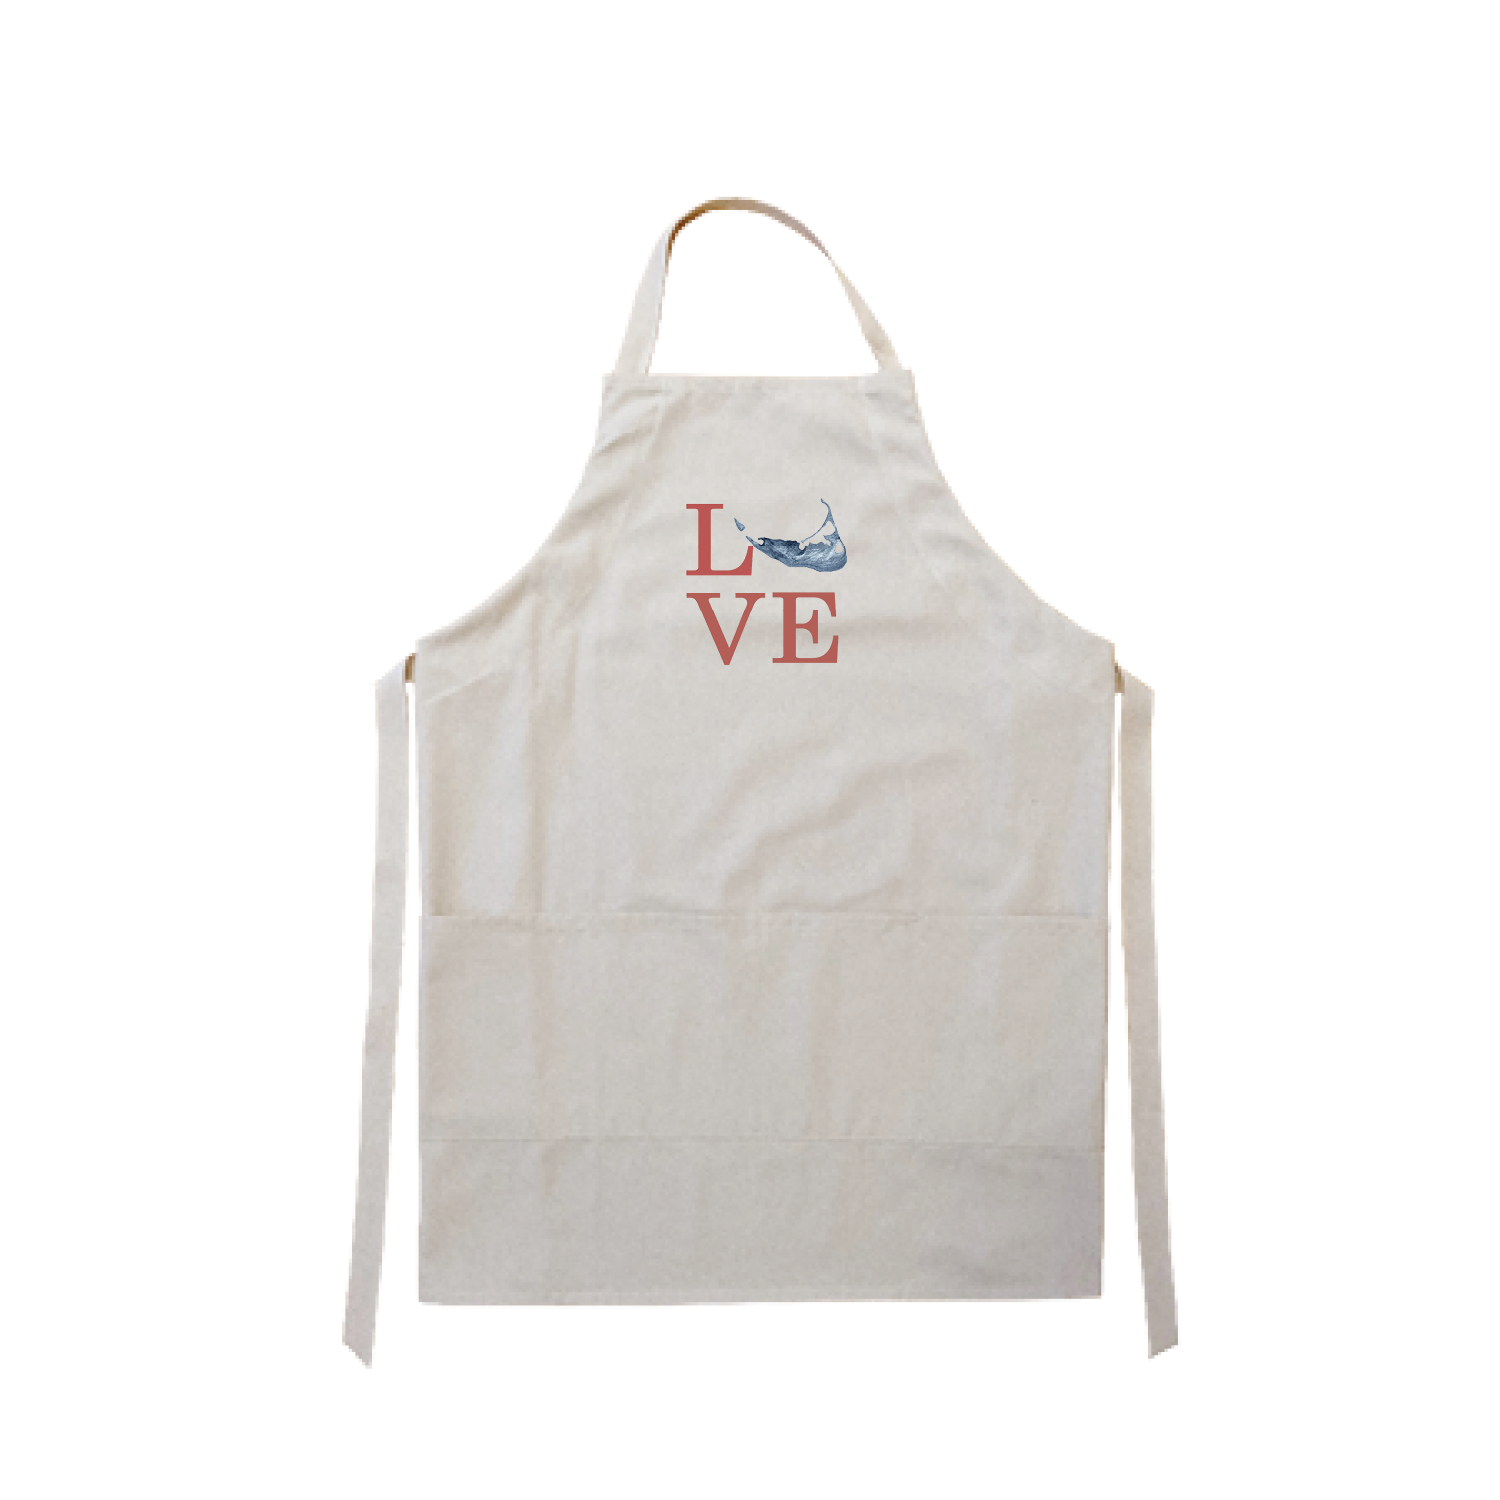 love nantucket island apron